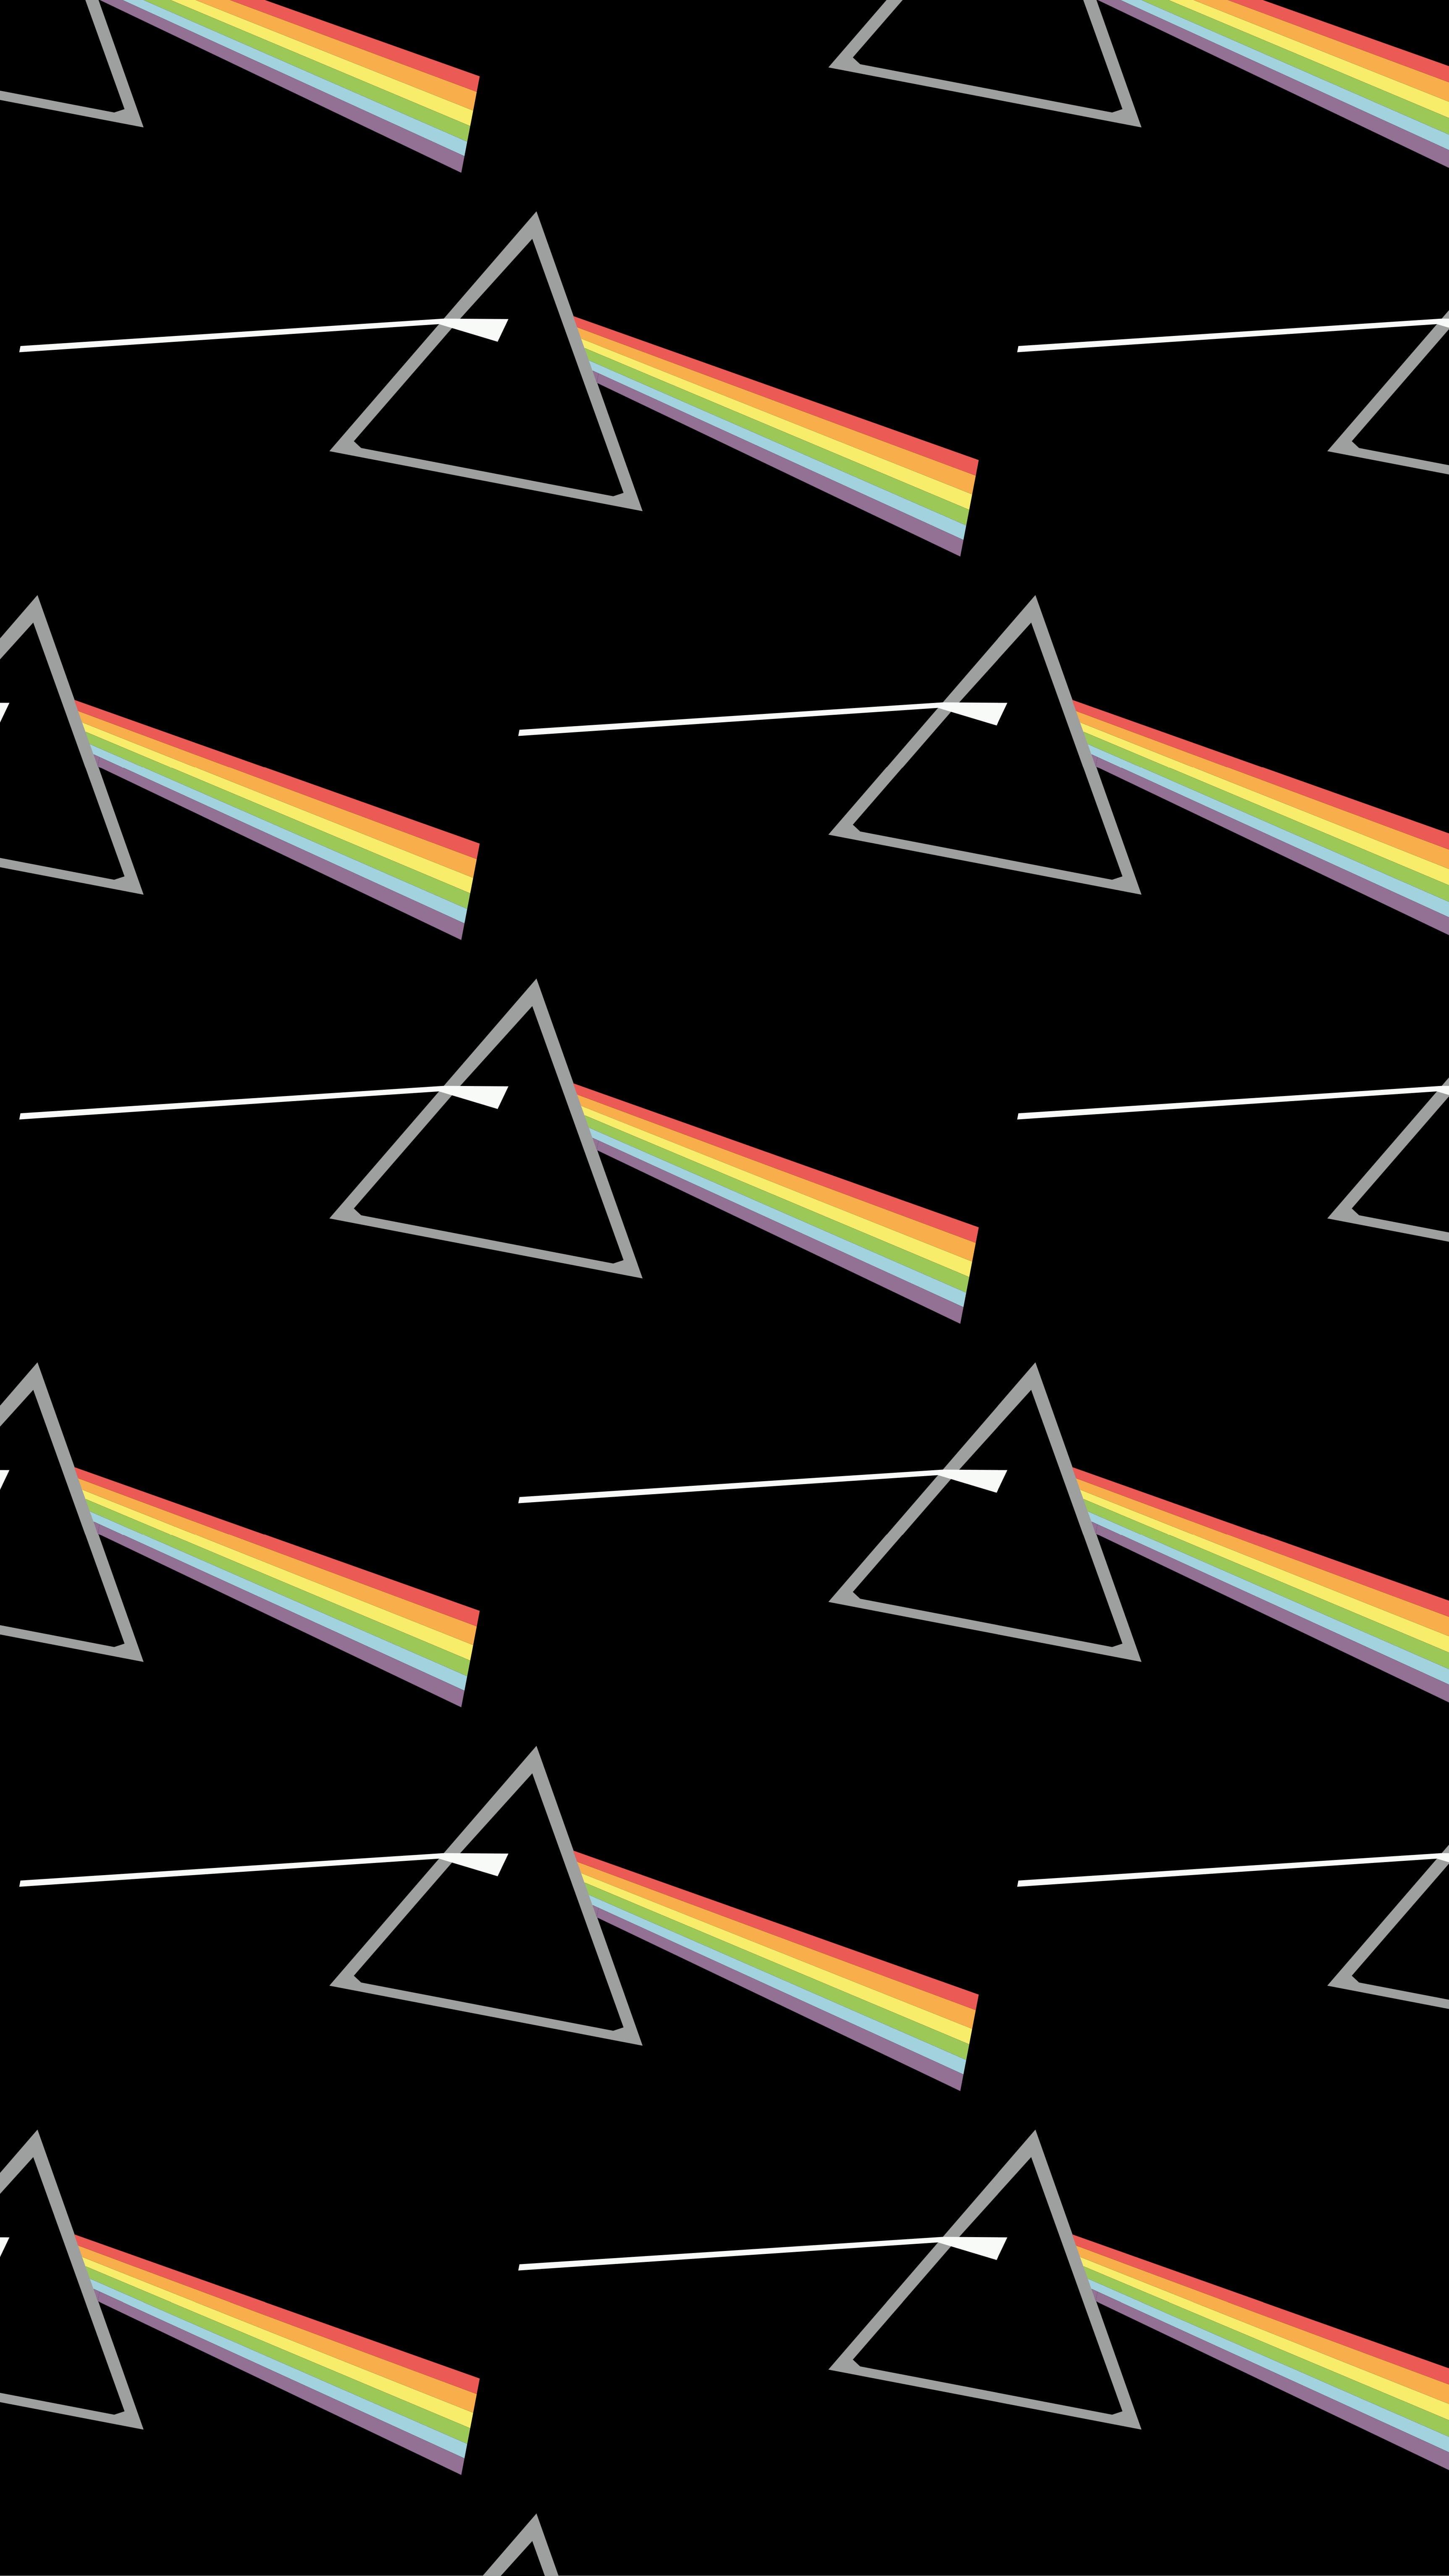 Pink Floyd 2019 Wallpapers - Wallpaper Cave